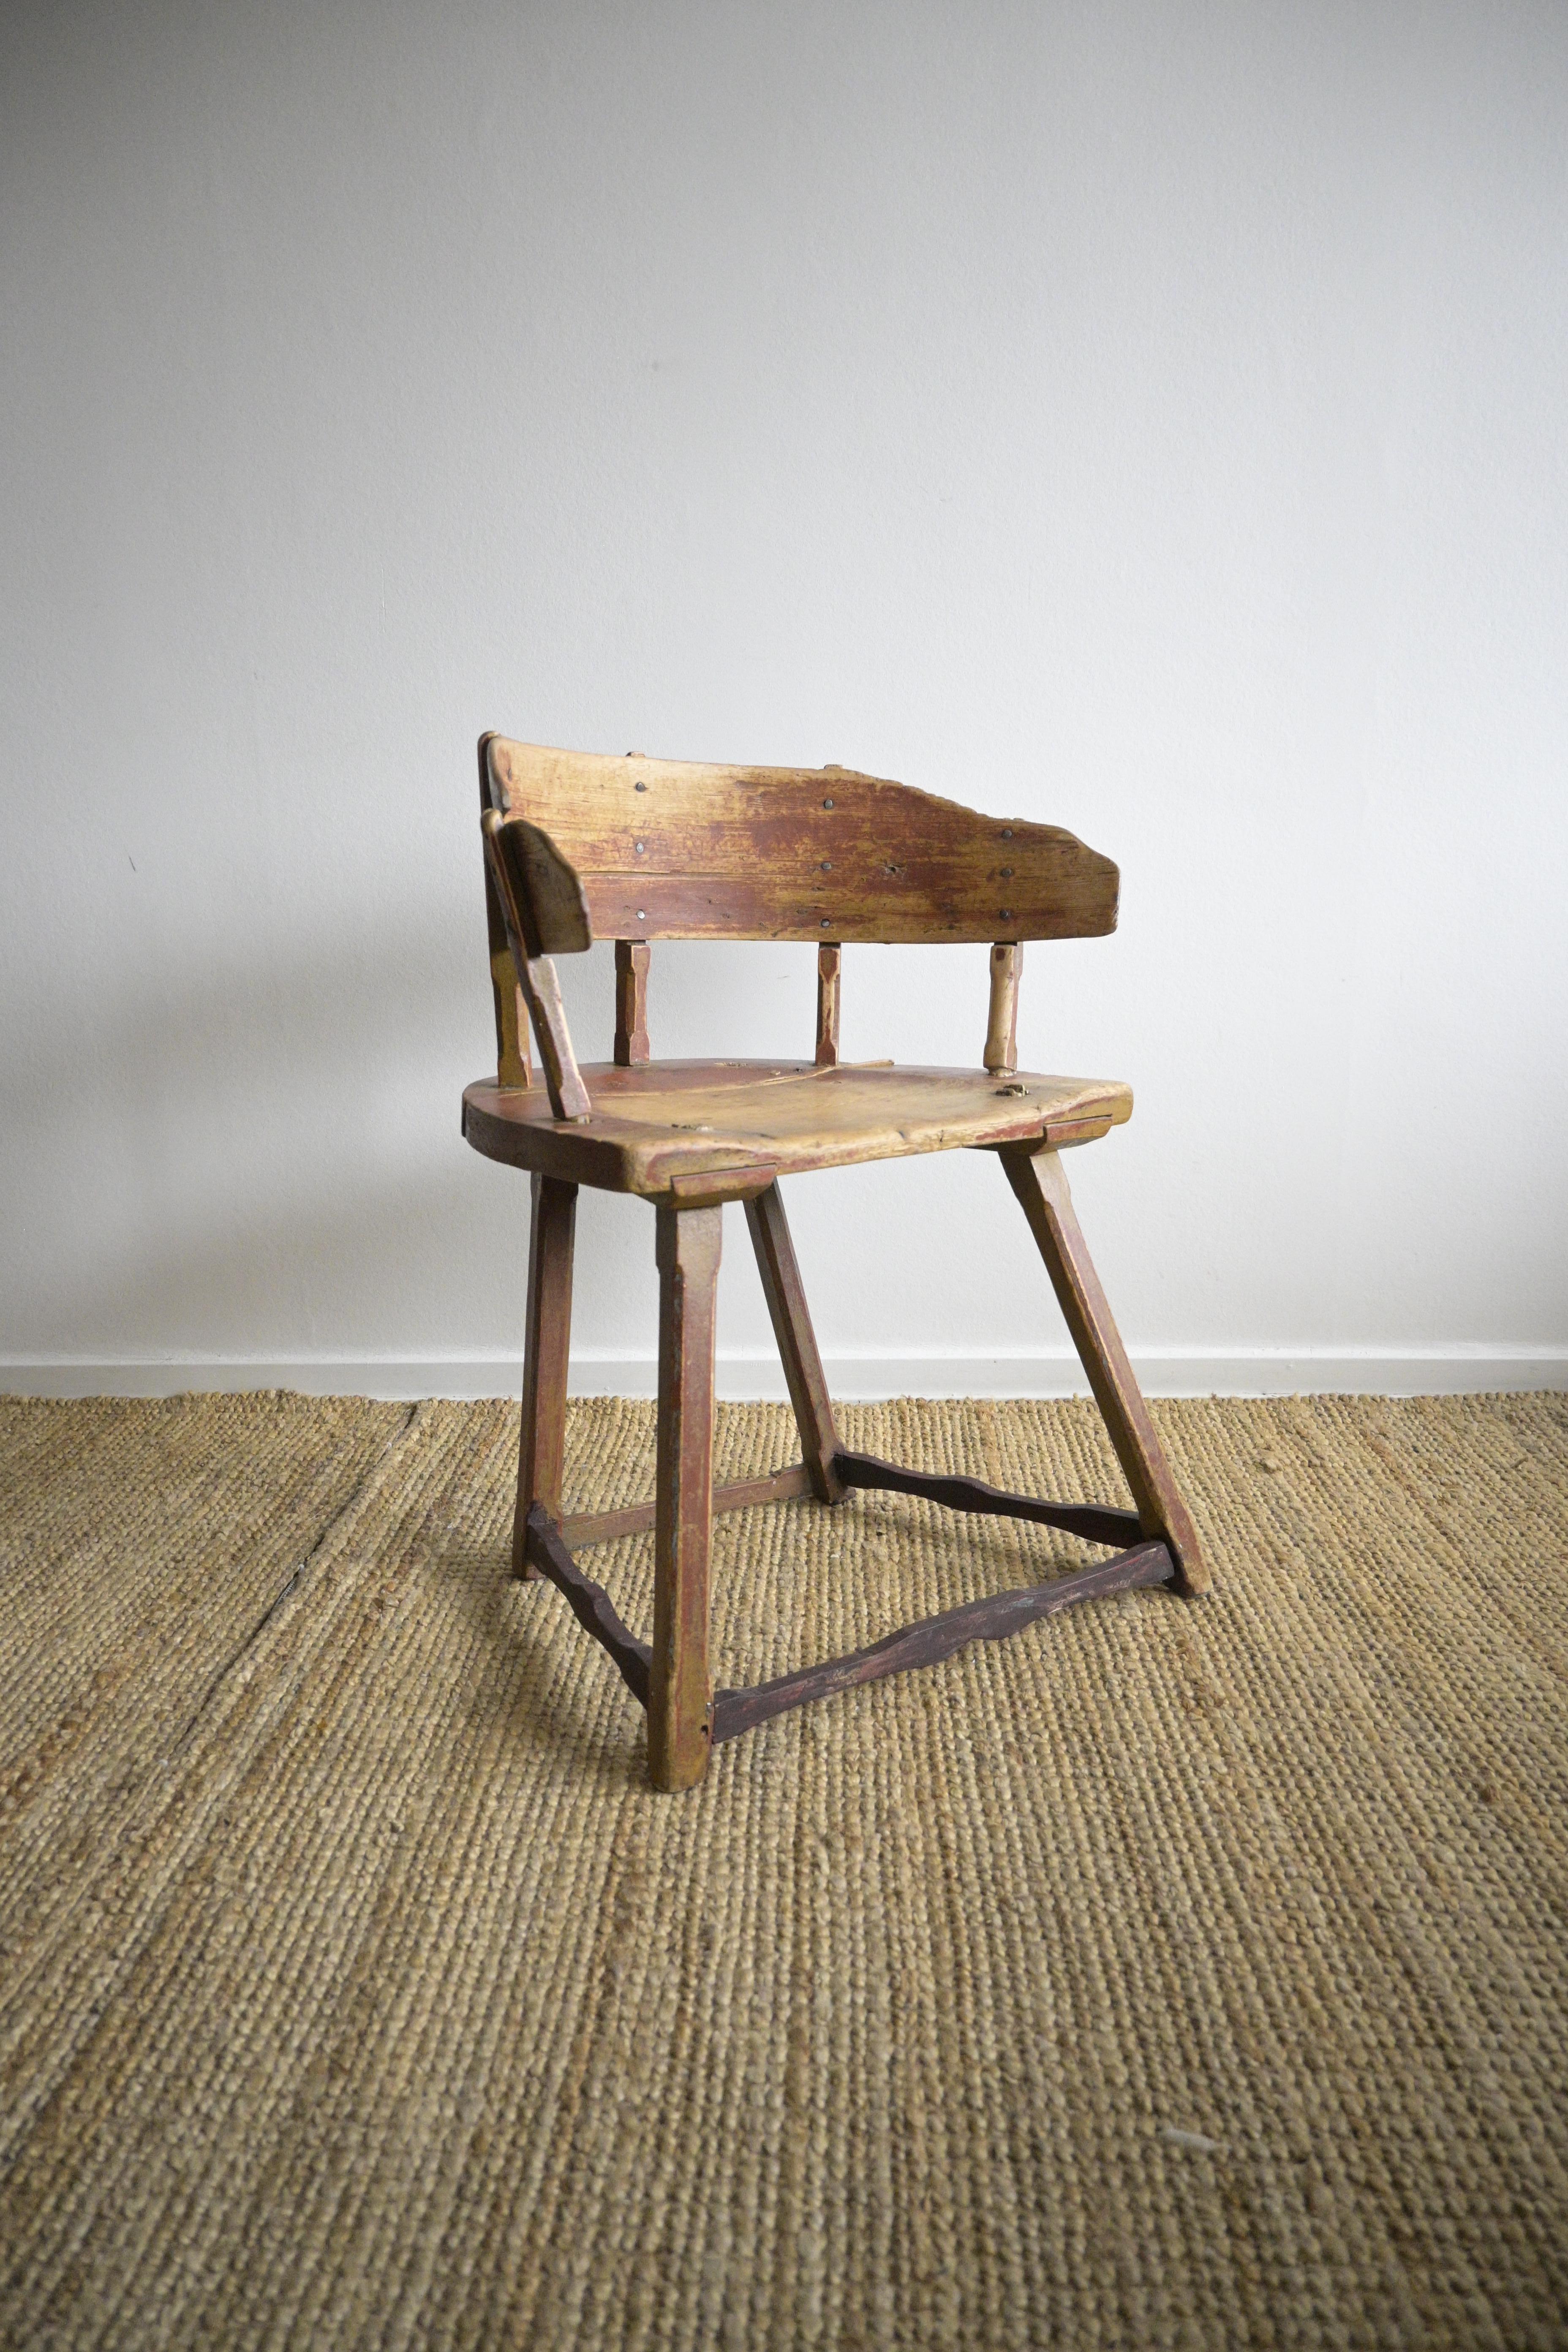 Hand-Carved Scandinavian folk art chair circa 1830-50s For Sale